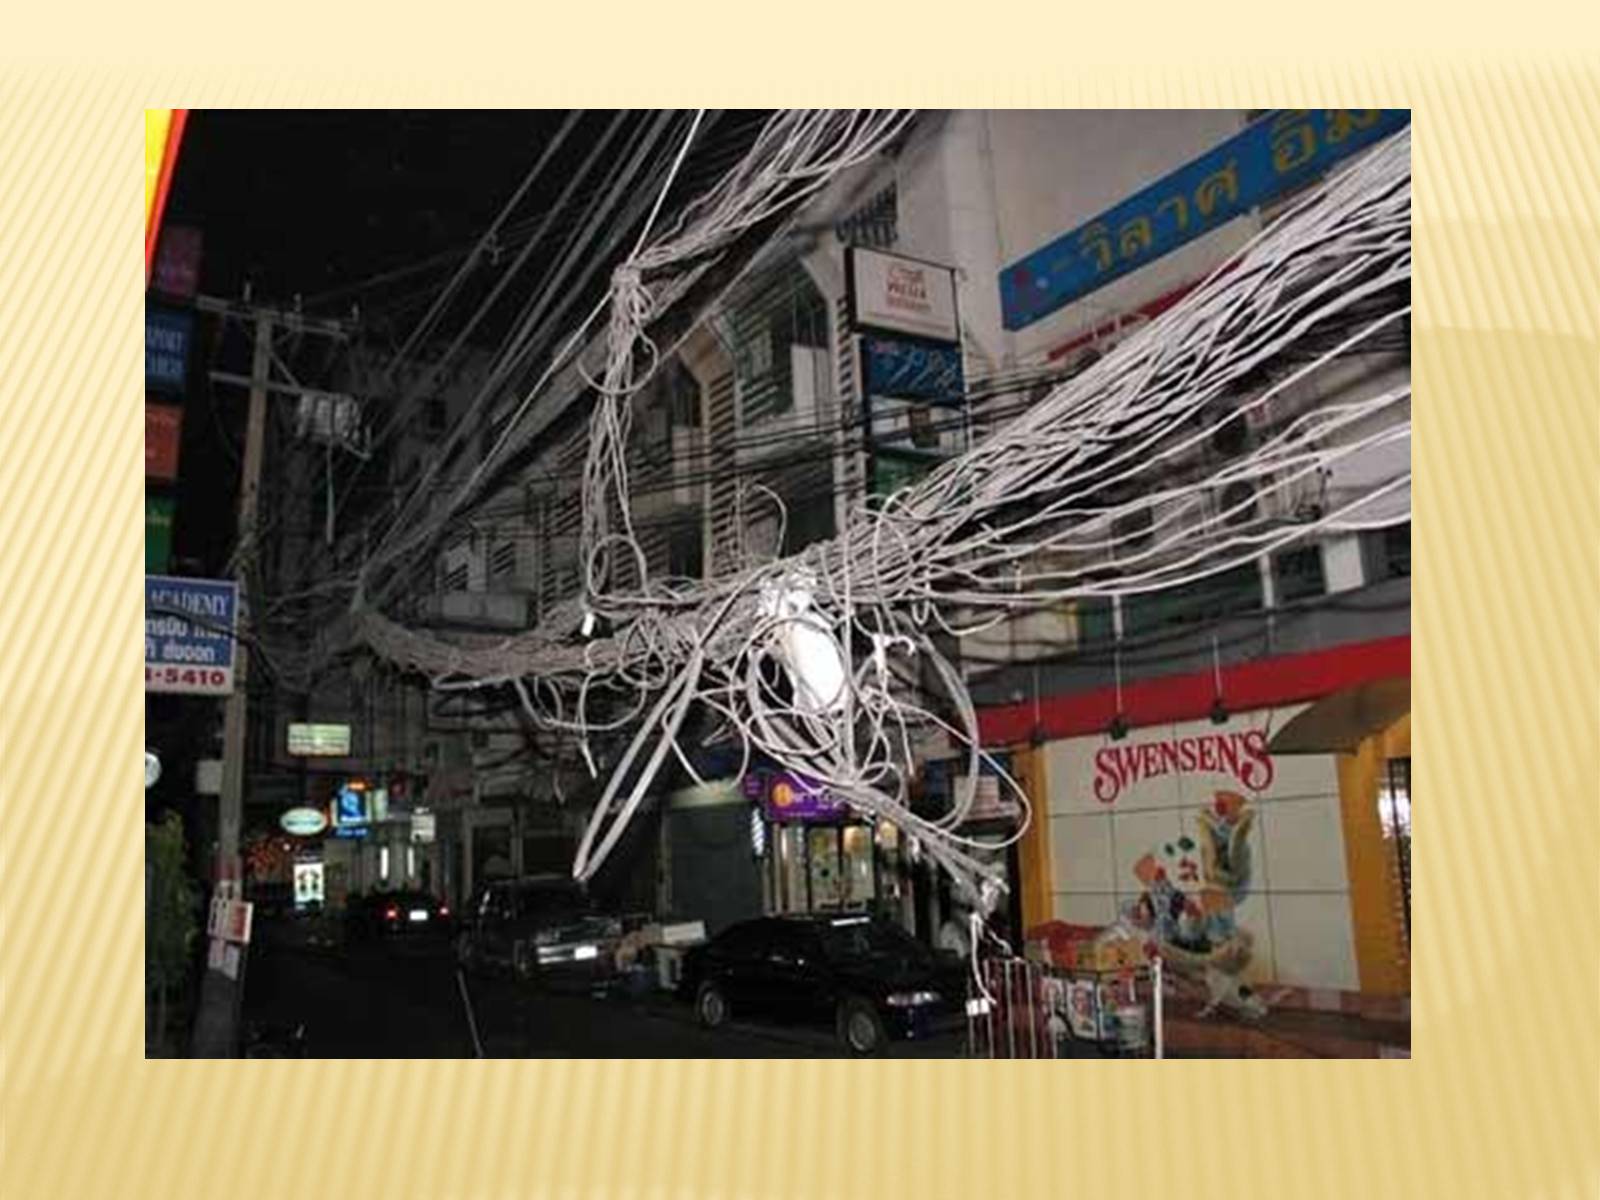 провода в тайланде